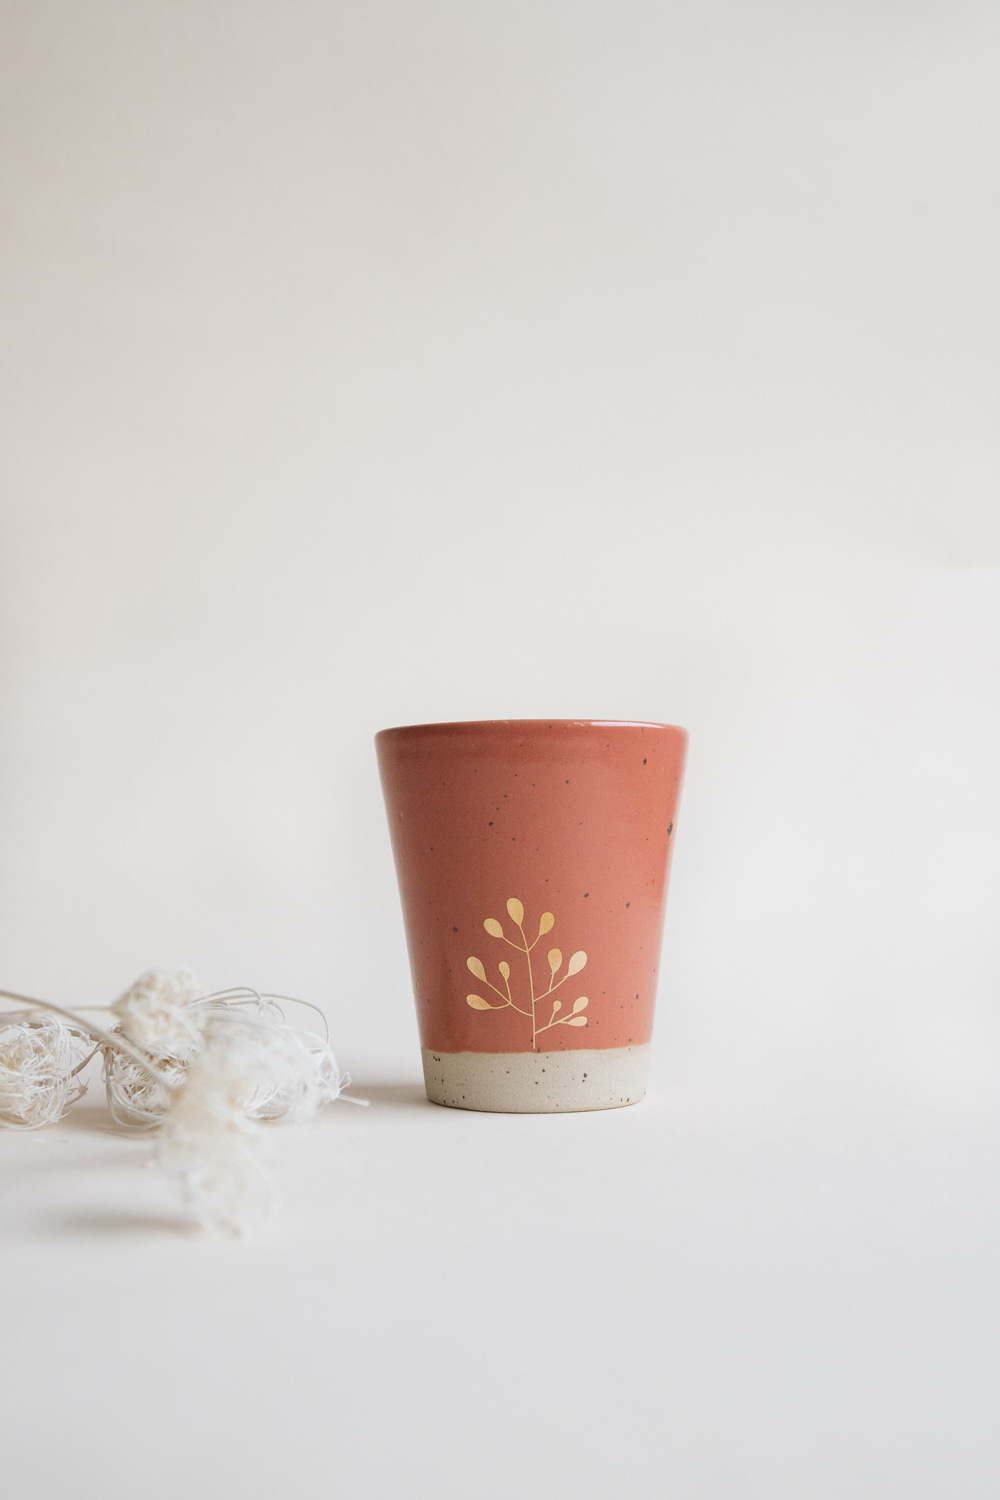 Marinski Handmade Ceramic Cup - Cinnamon